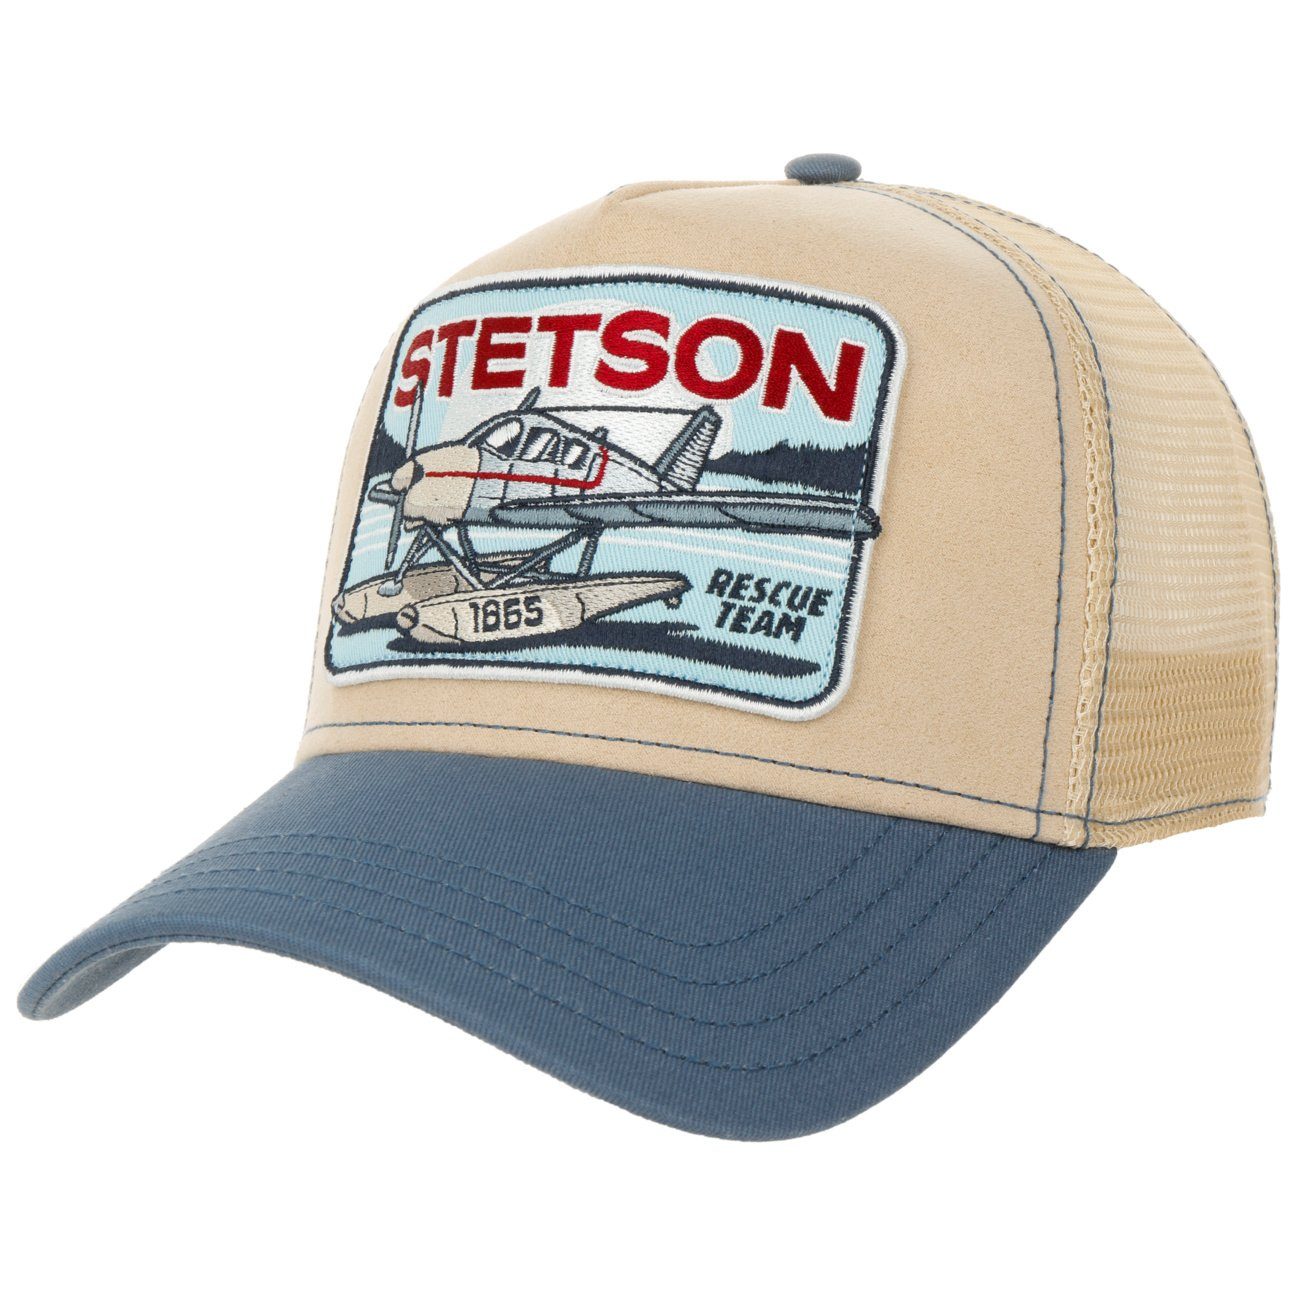 (1-St) Cap Basecap Stetson Snapback Trucker